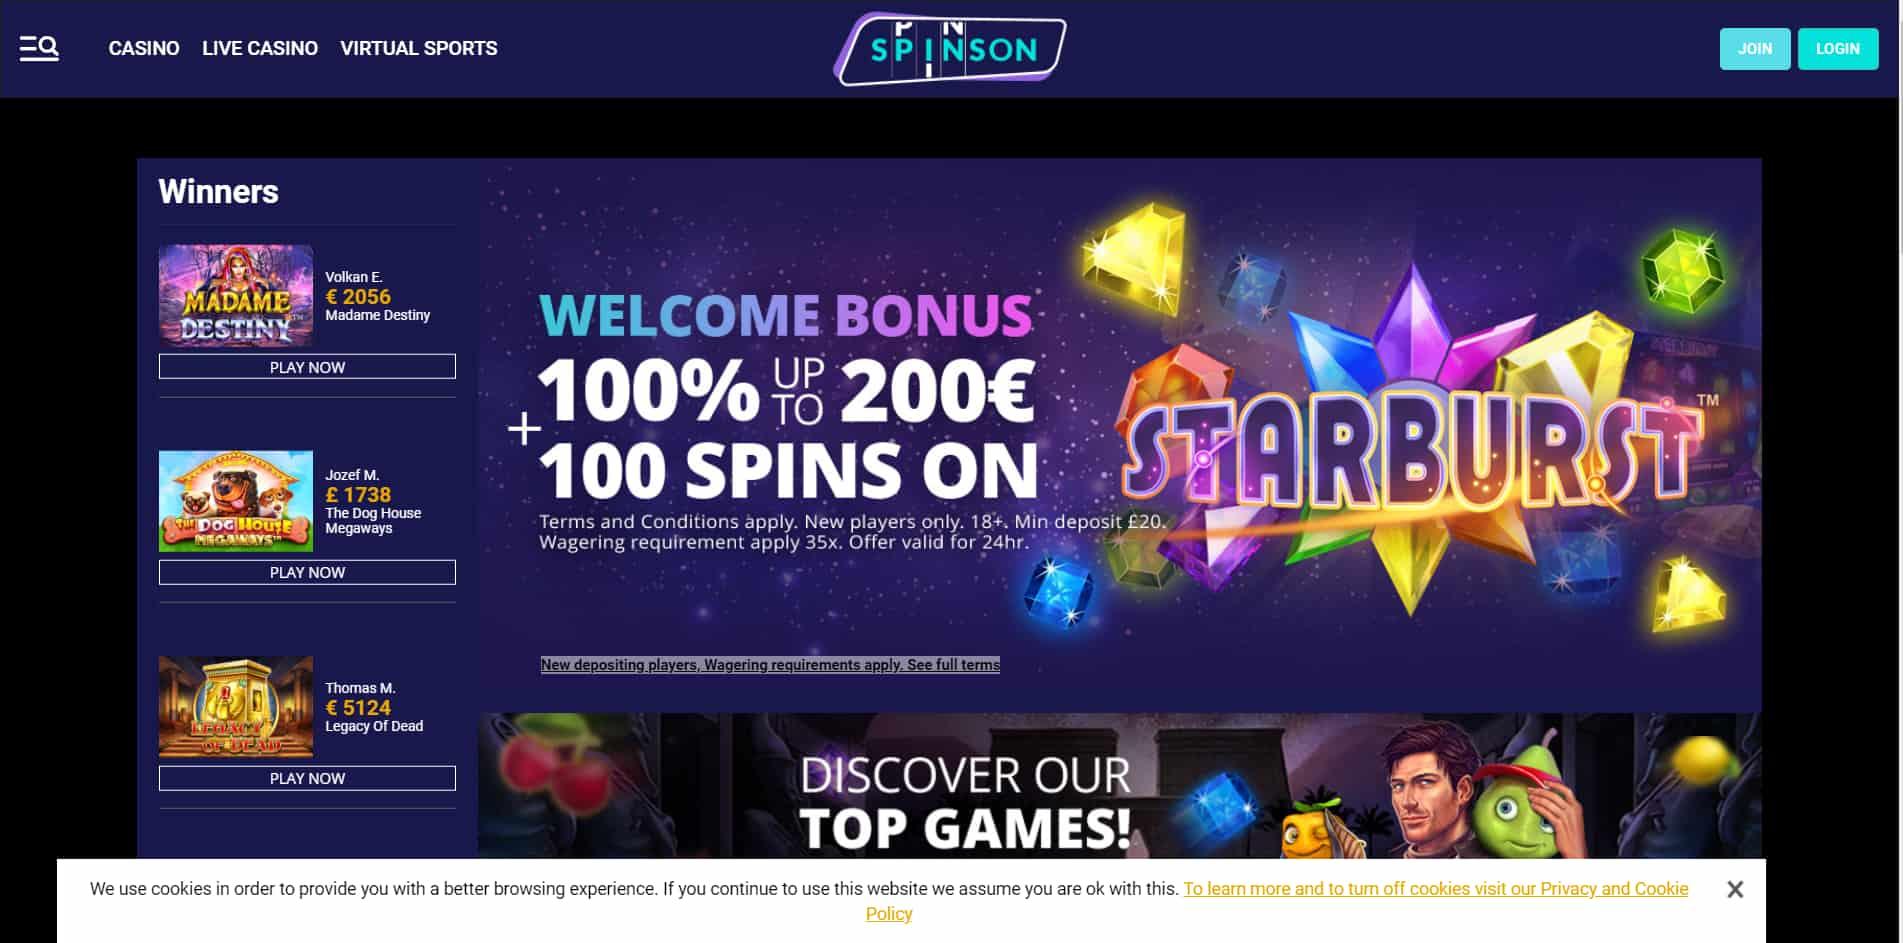 Spinson casino homepage